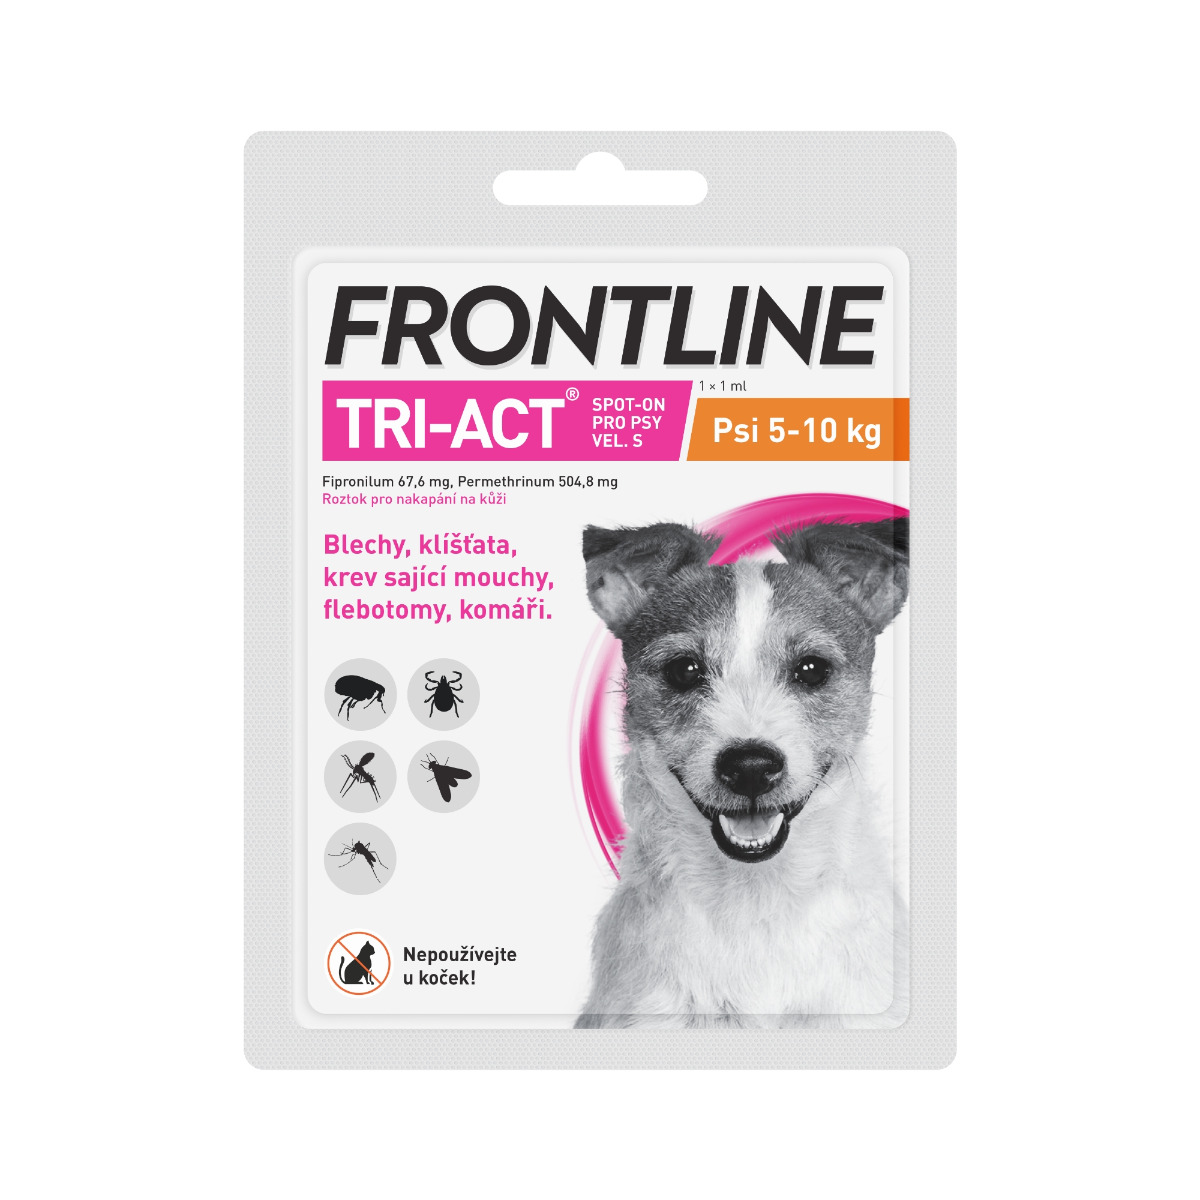 Frontline TRI-ACT psi 5-10 kg spot-on 1 pipeta FRONTLINE